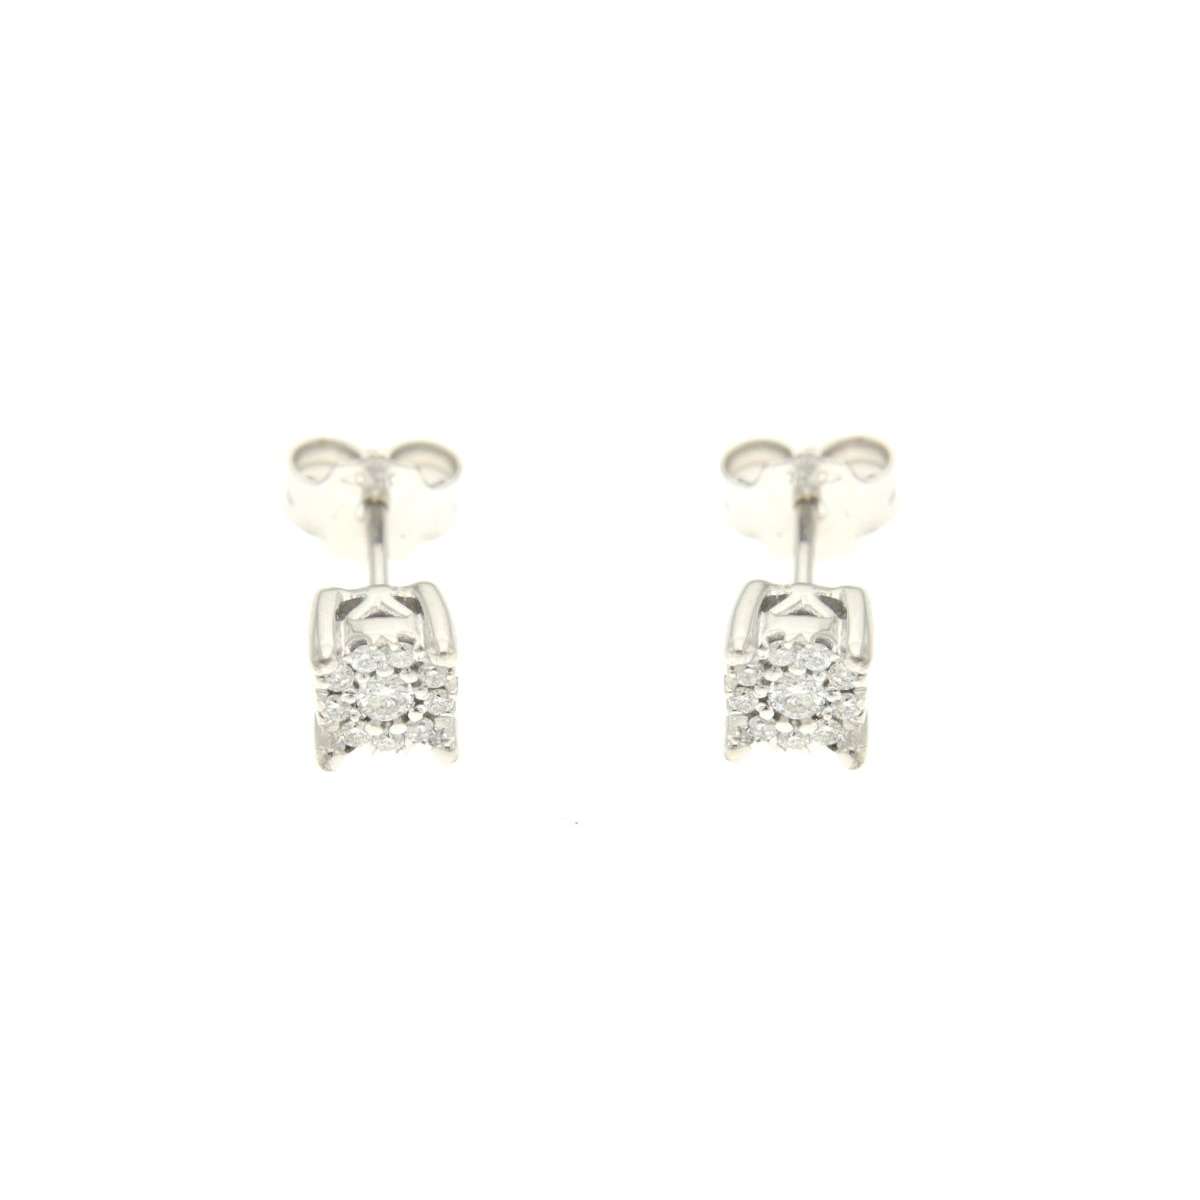 Solitaire earrings 0.13 carats diamonds G-VS1